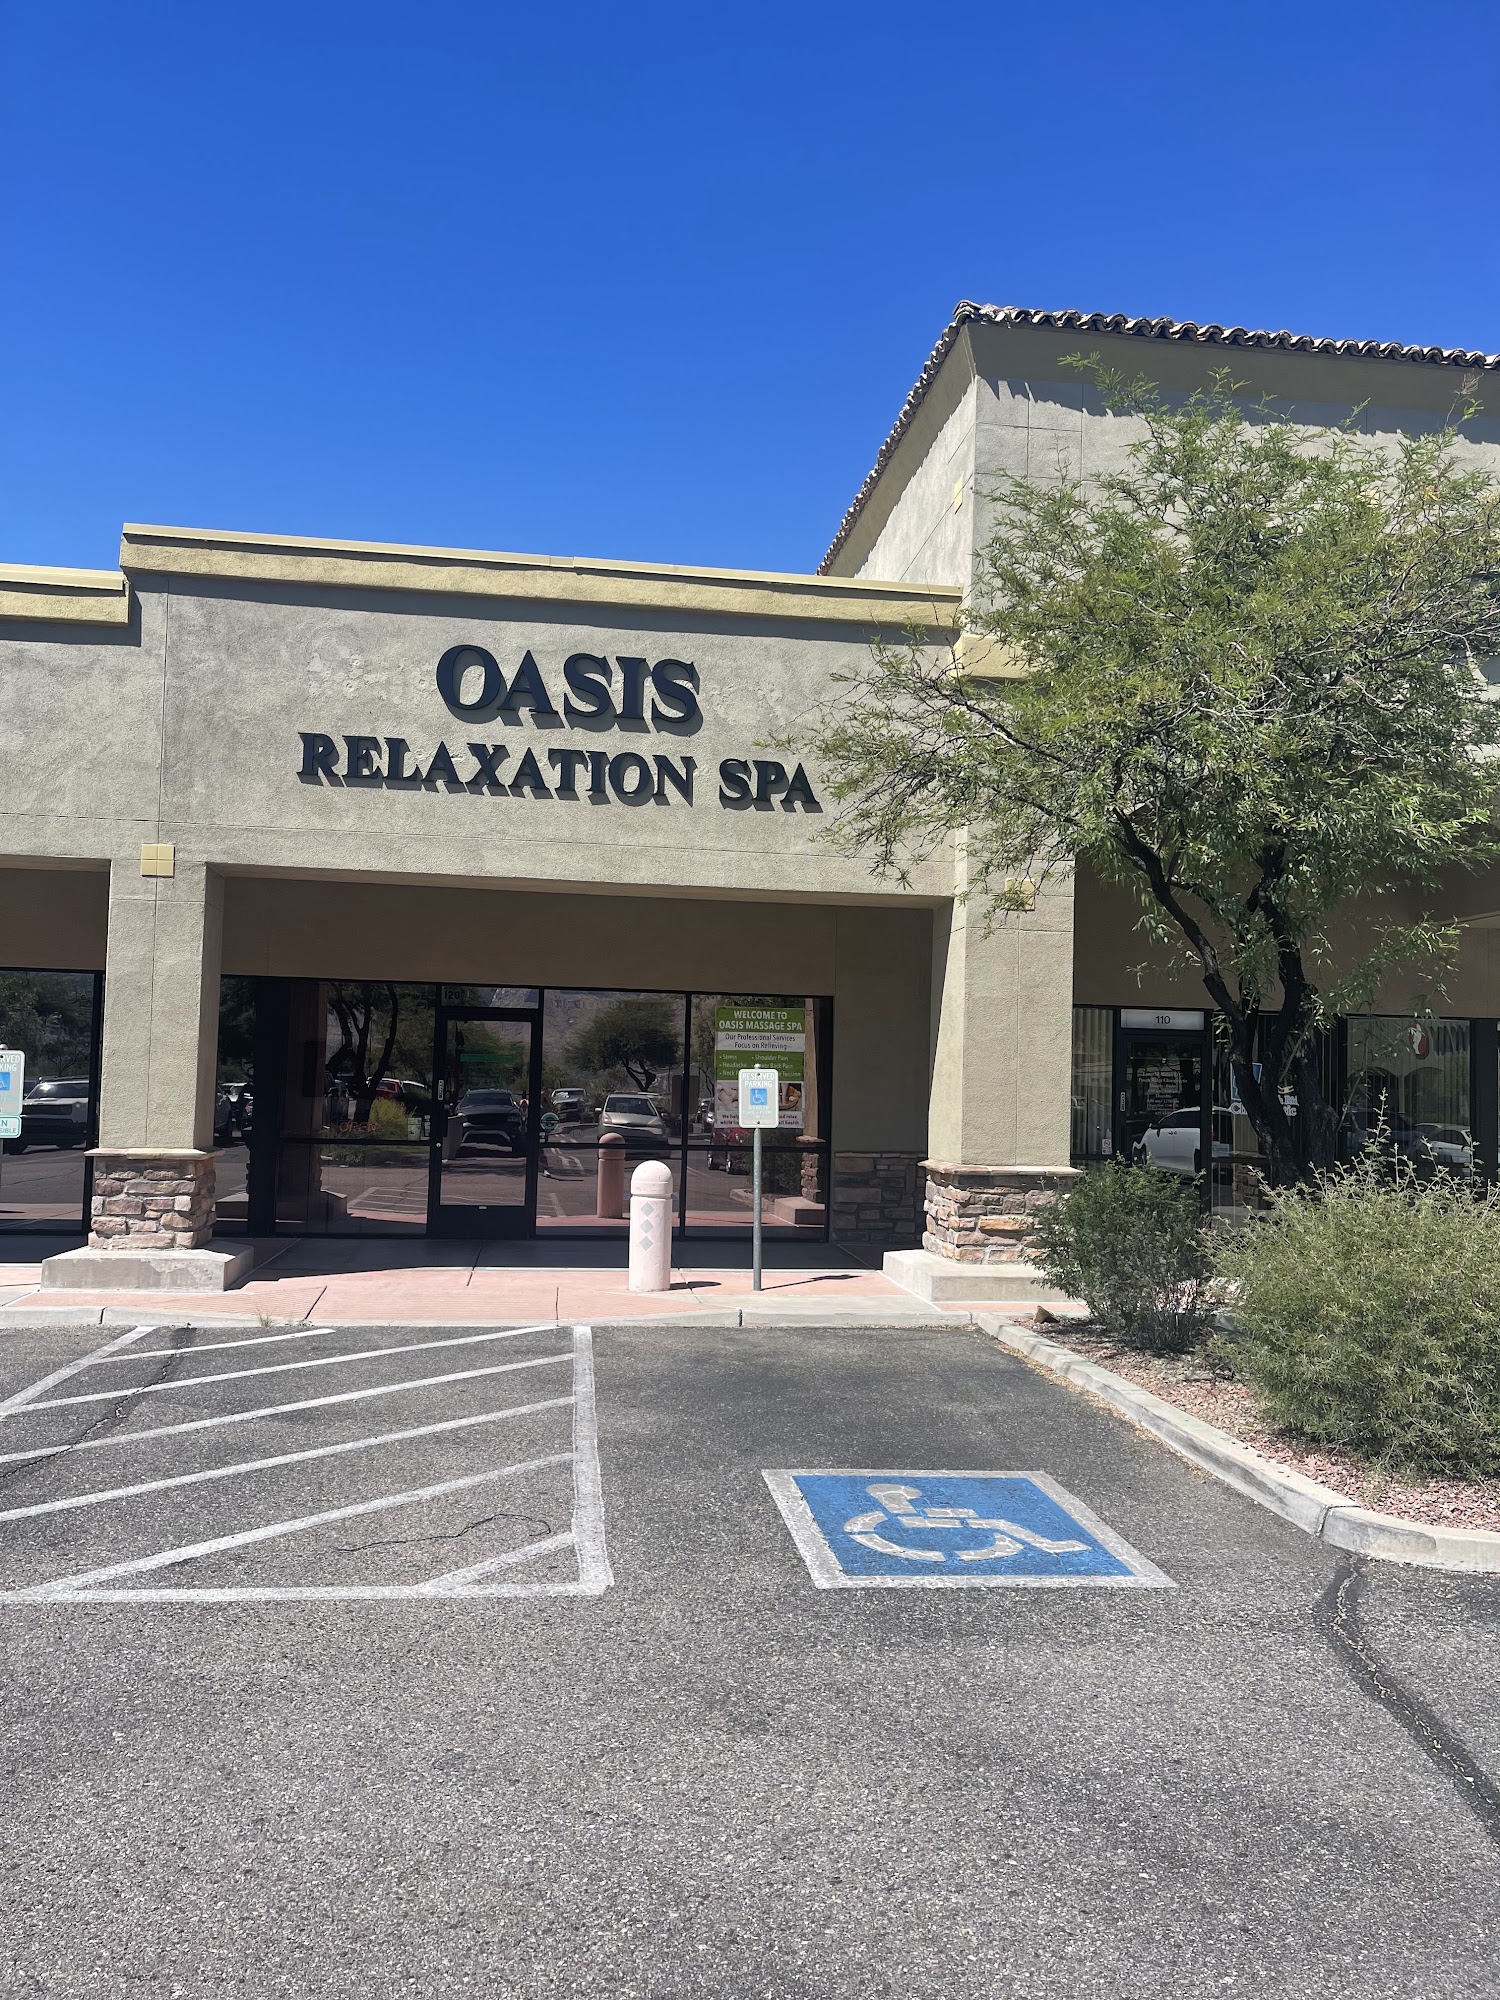 Oasis Massage Spa